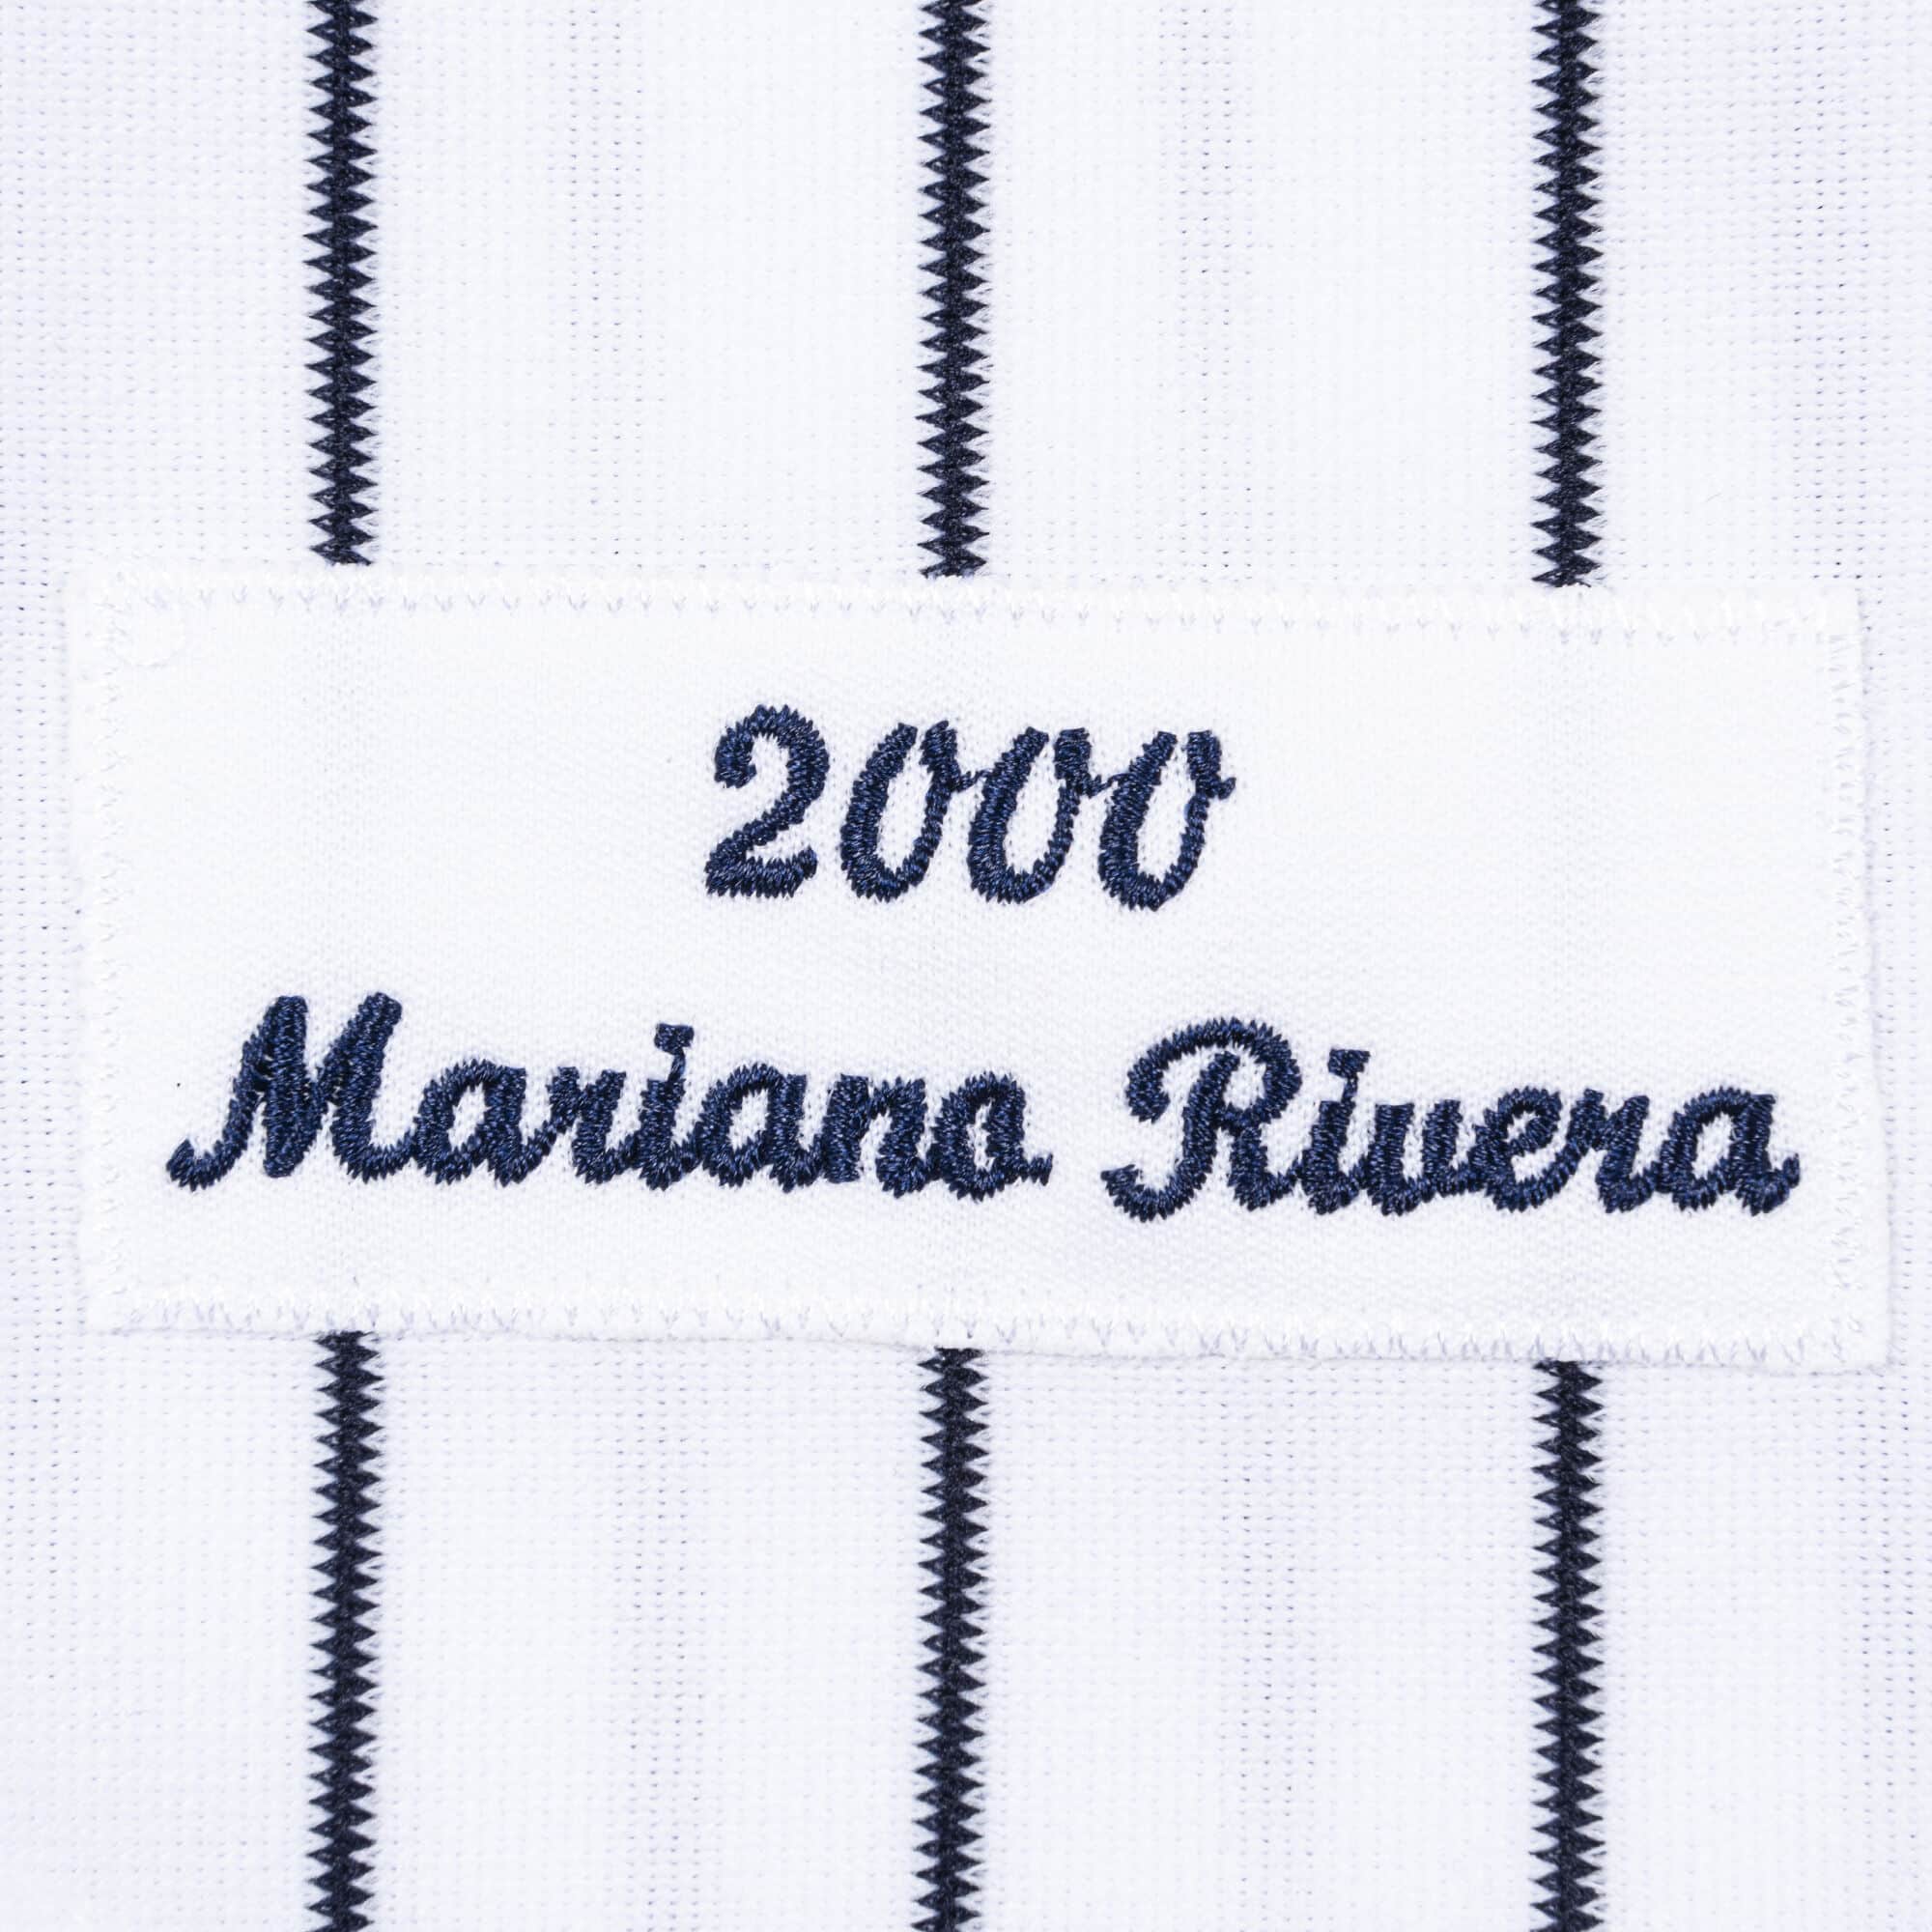 Mitchell & Ness Authentic New York Yankees 2000 Mariano Rivera Jersey